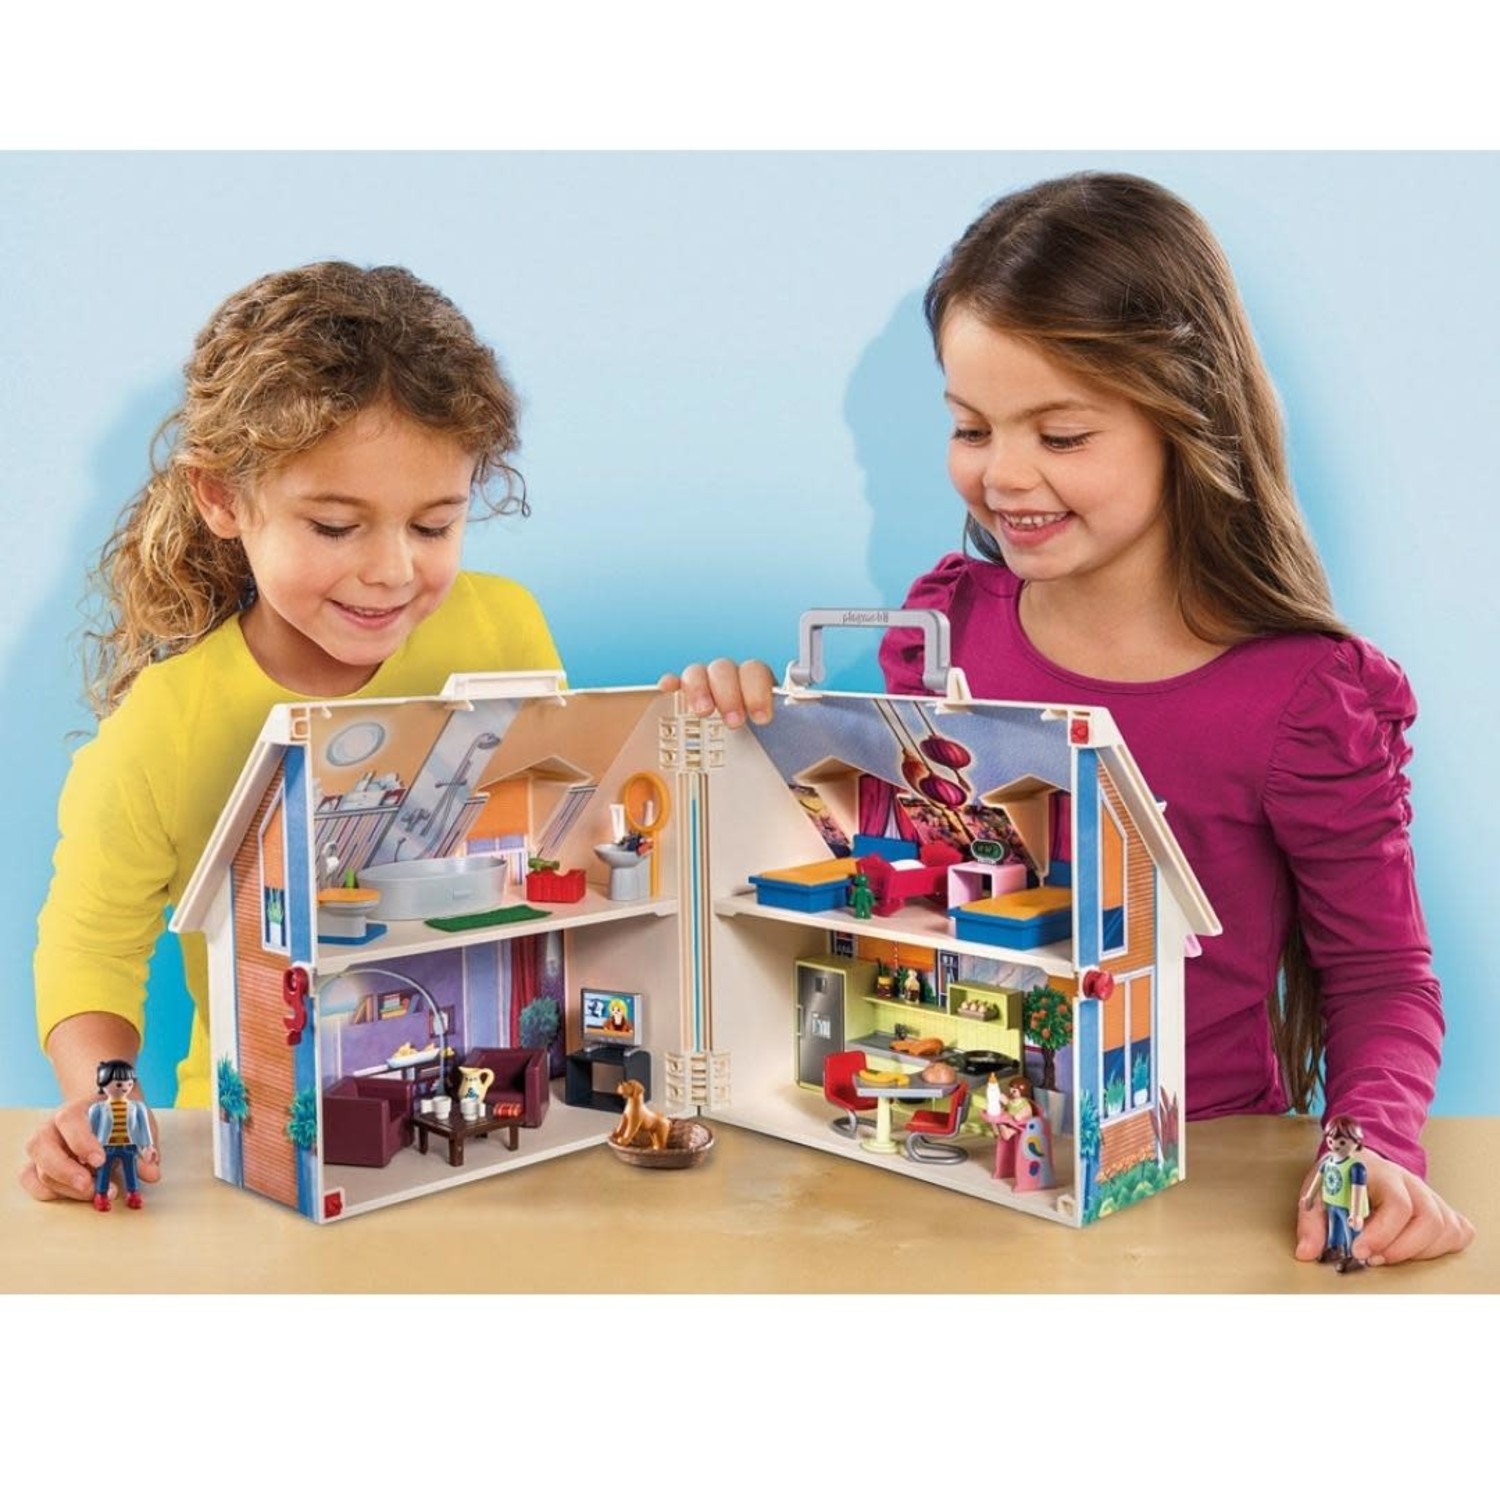 Måler Det Calamity Playmobil Take Along Modern Dollhouse - Mudpuddles Toys and Books